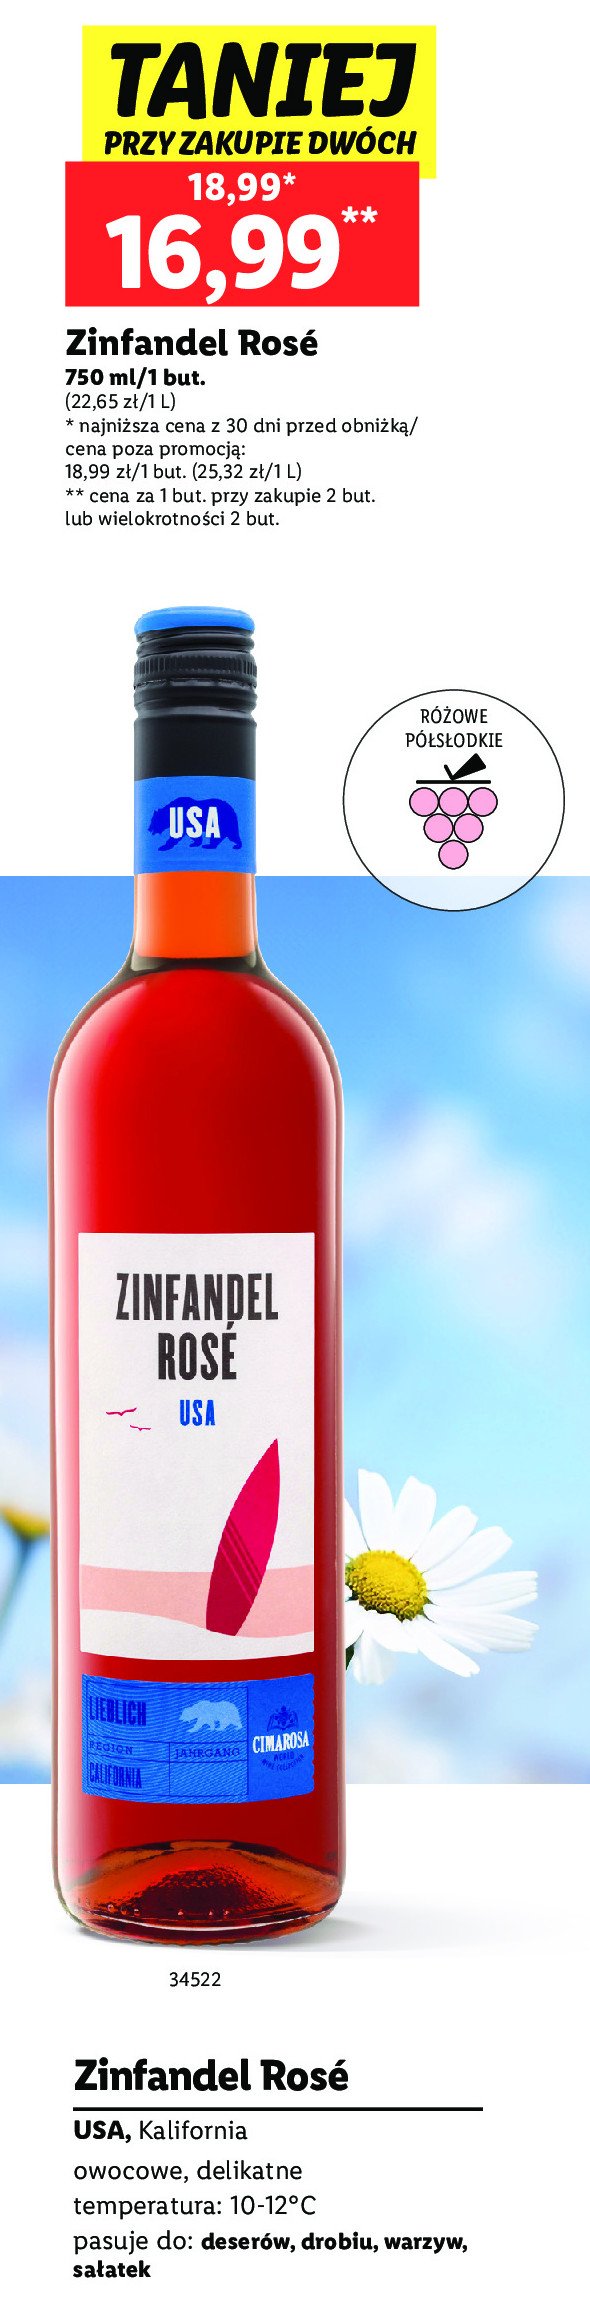 Wino Cimarosa zinfandel rose promocja